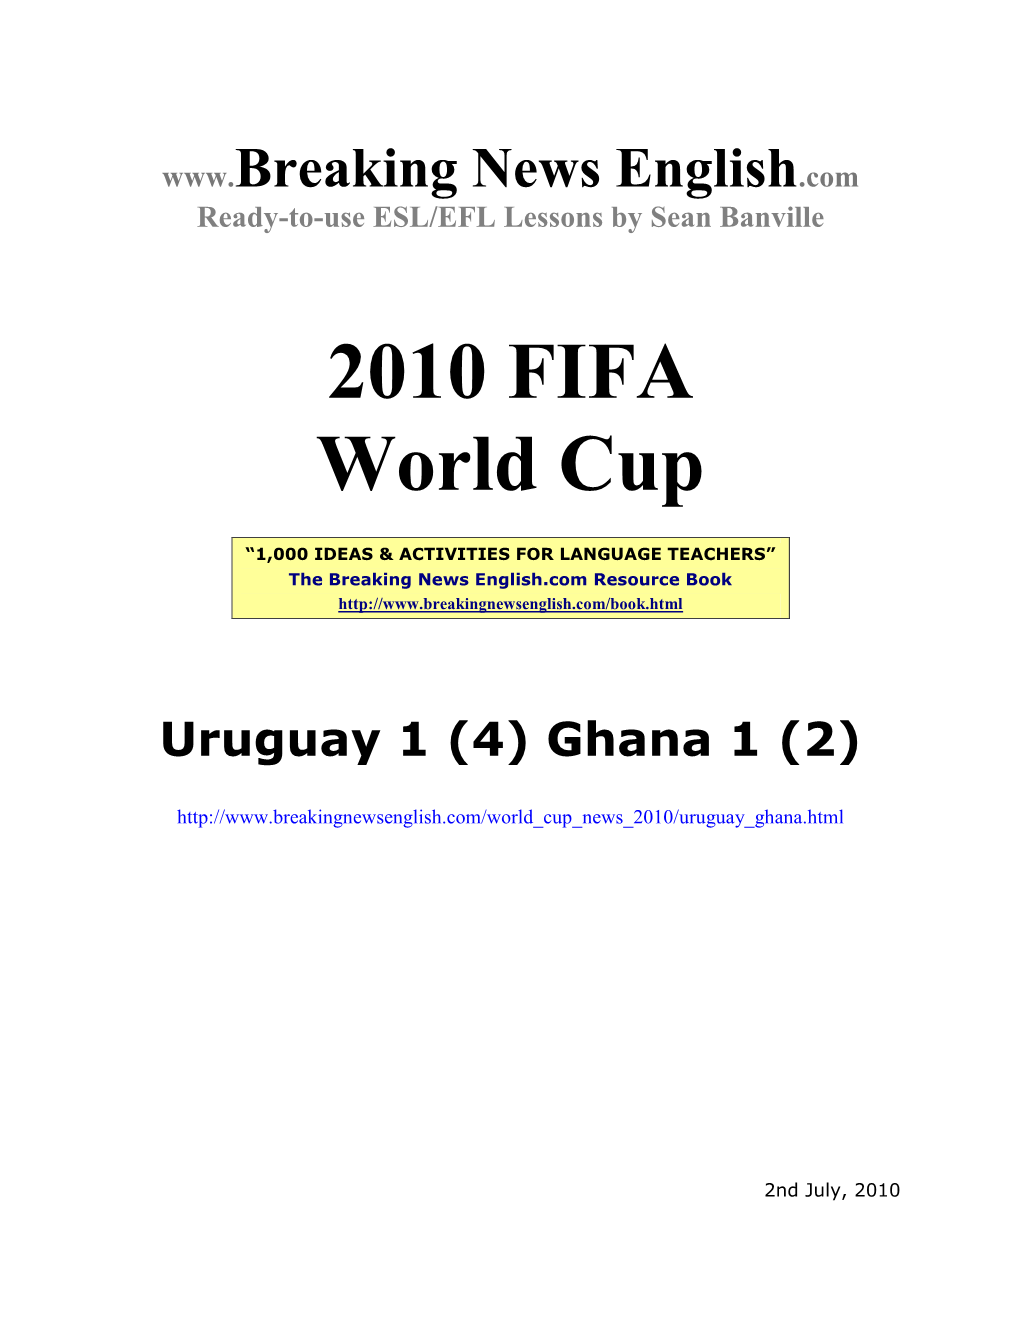 Uruguay 1 (4) Ghana 1 (2)